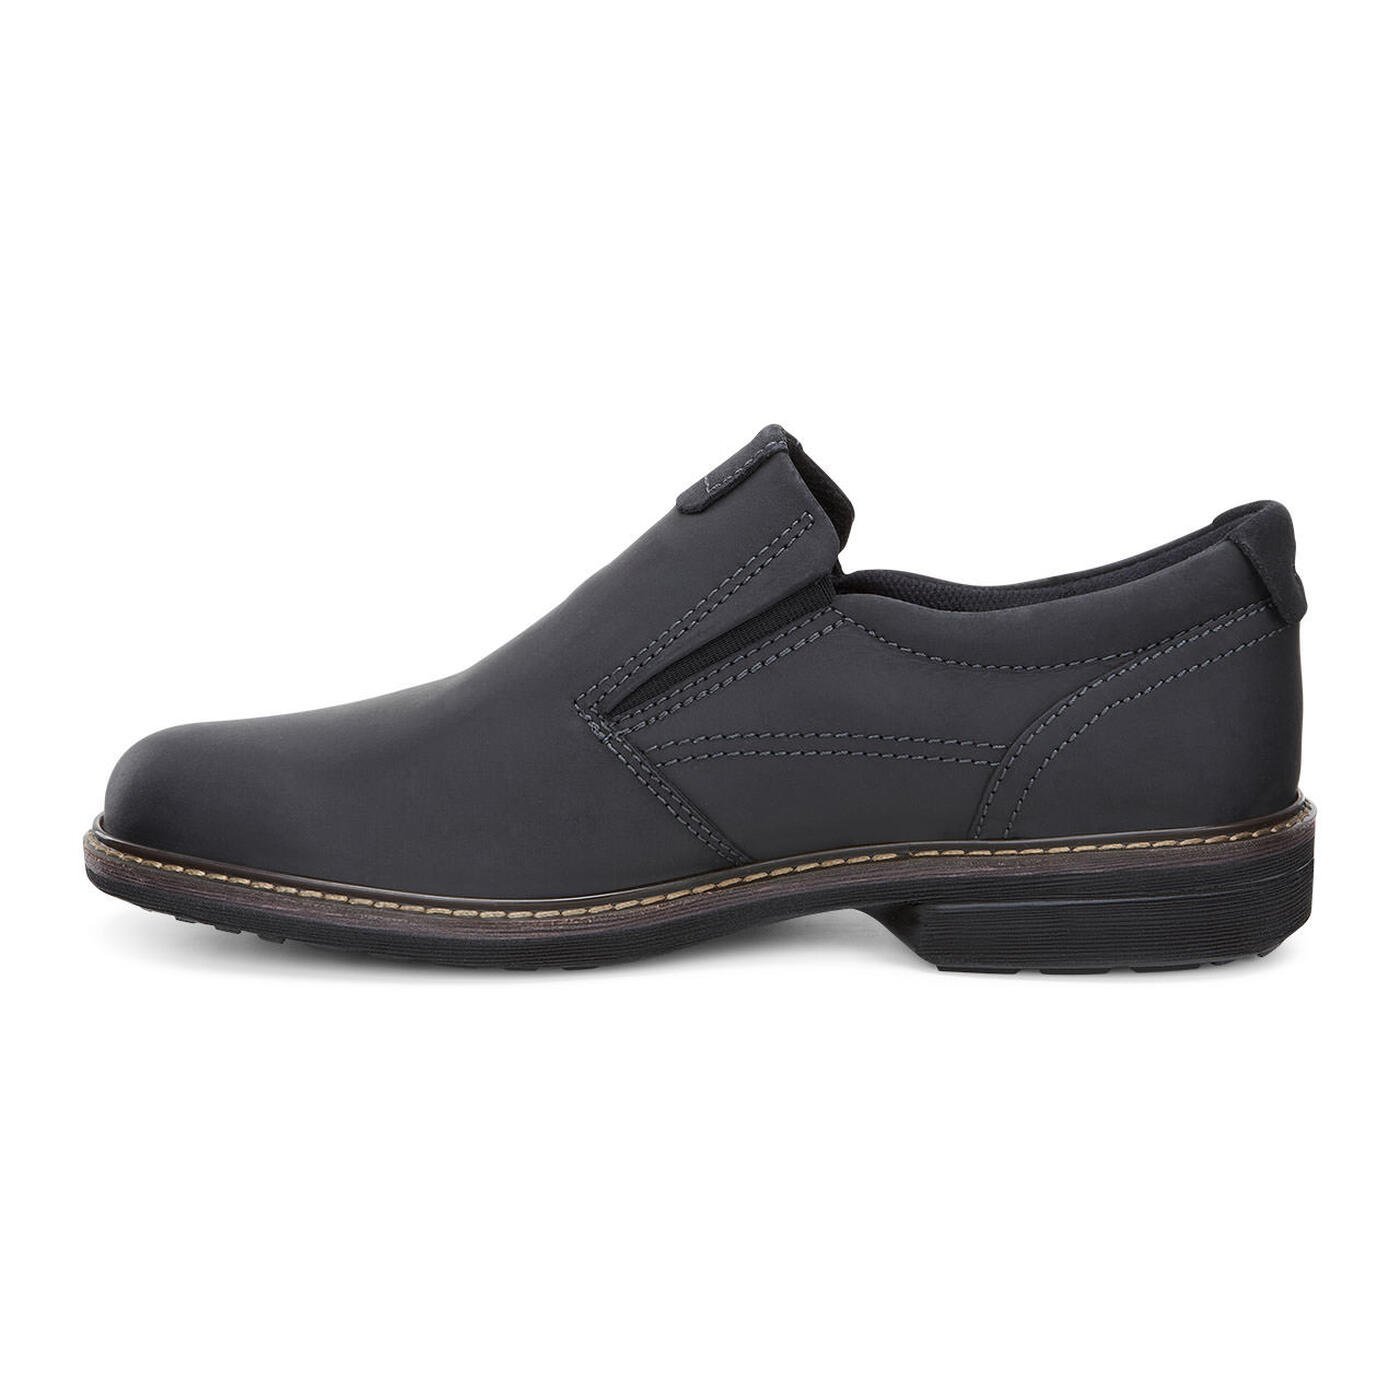 Turn Men's Slip On Shoes | Men's Casual Shoes | ECCO® Shoes